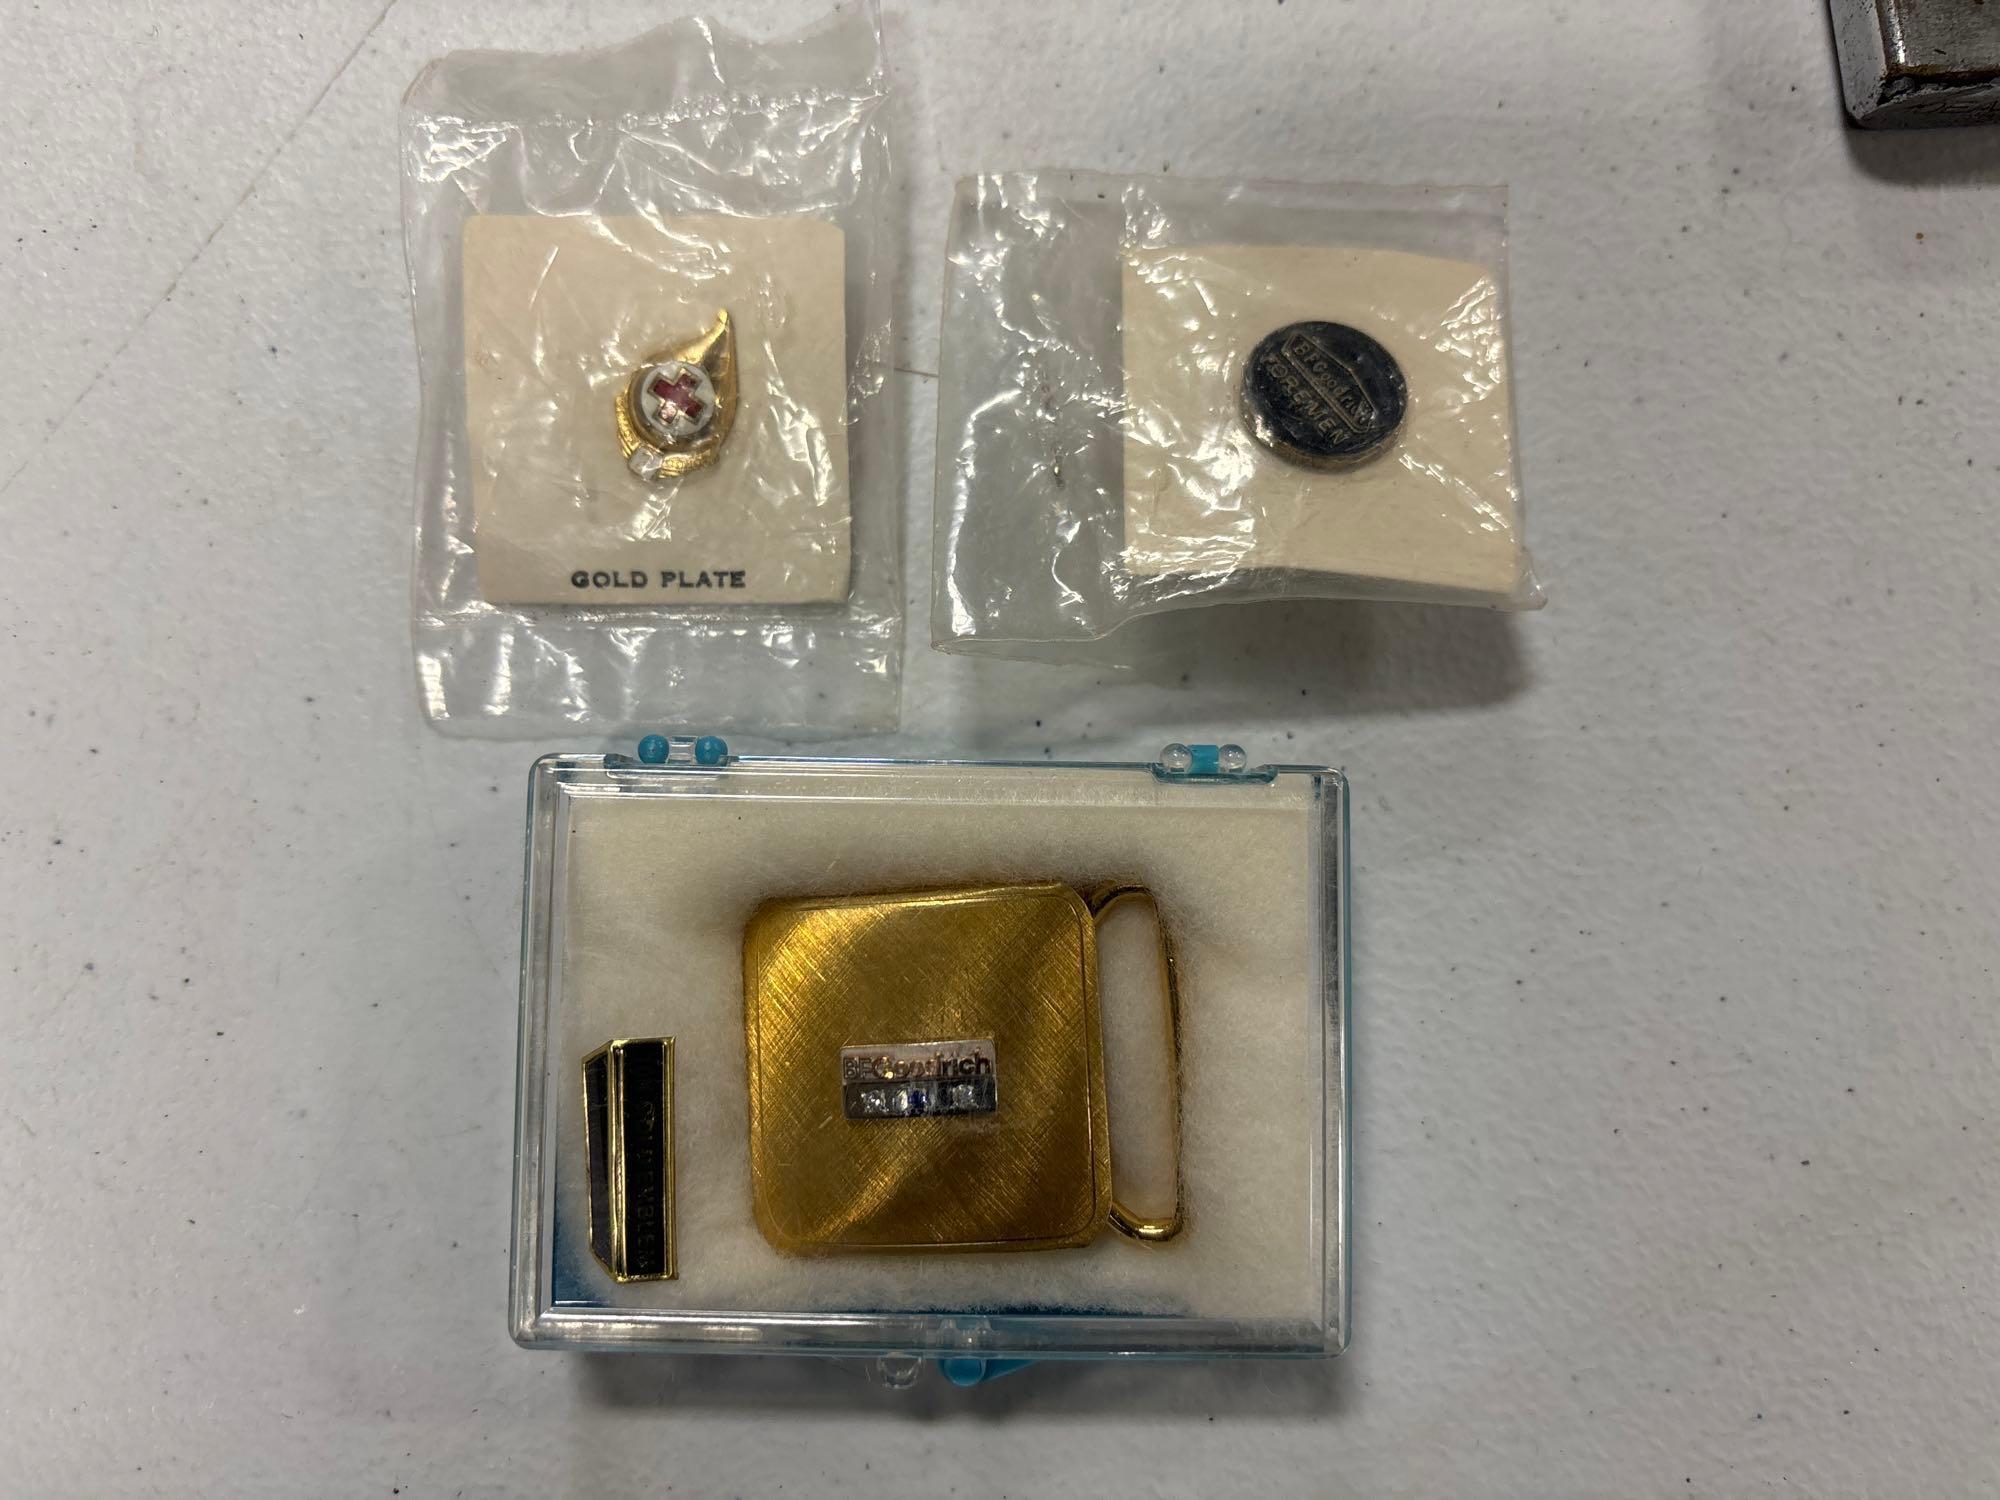 Pins - Federal Line and Stone Lighter - 10k Gold Emblem